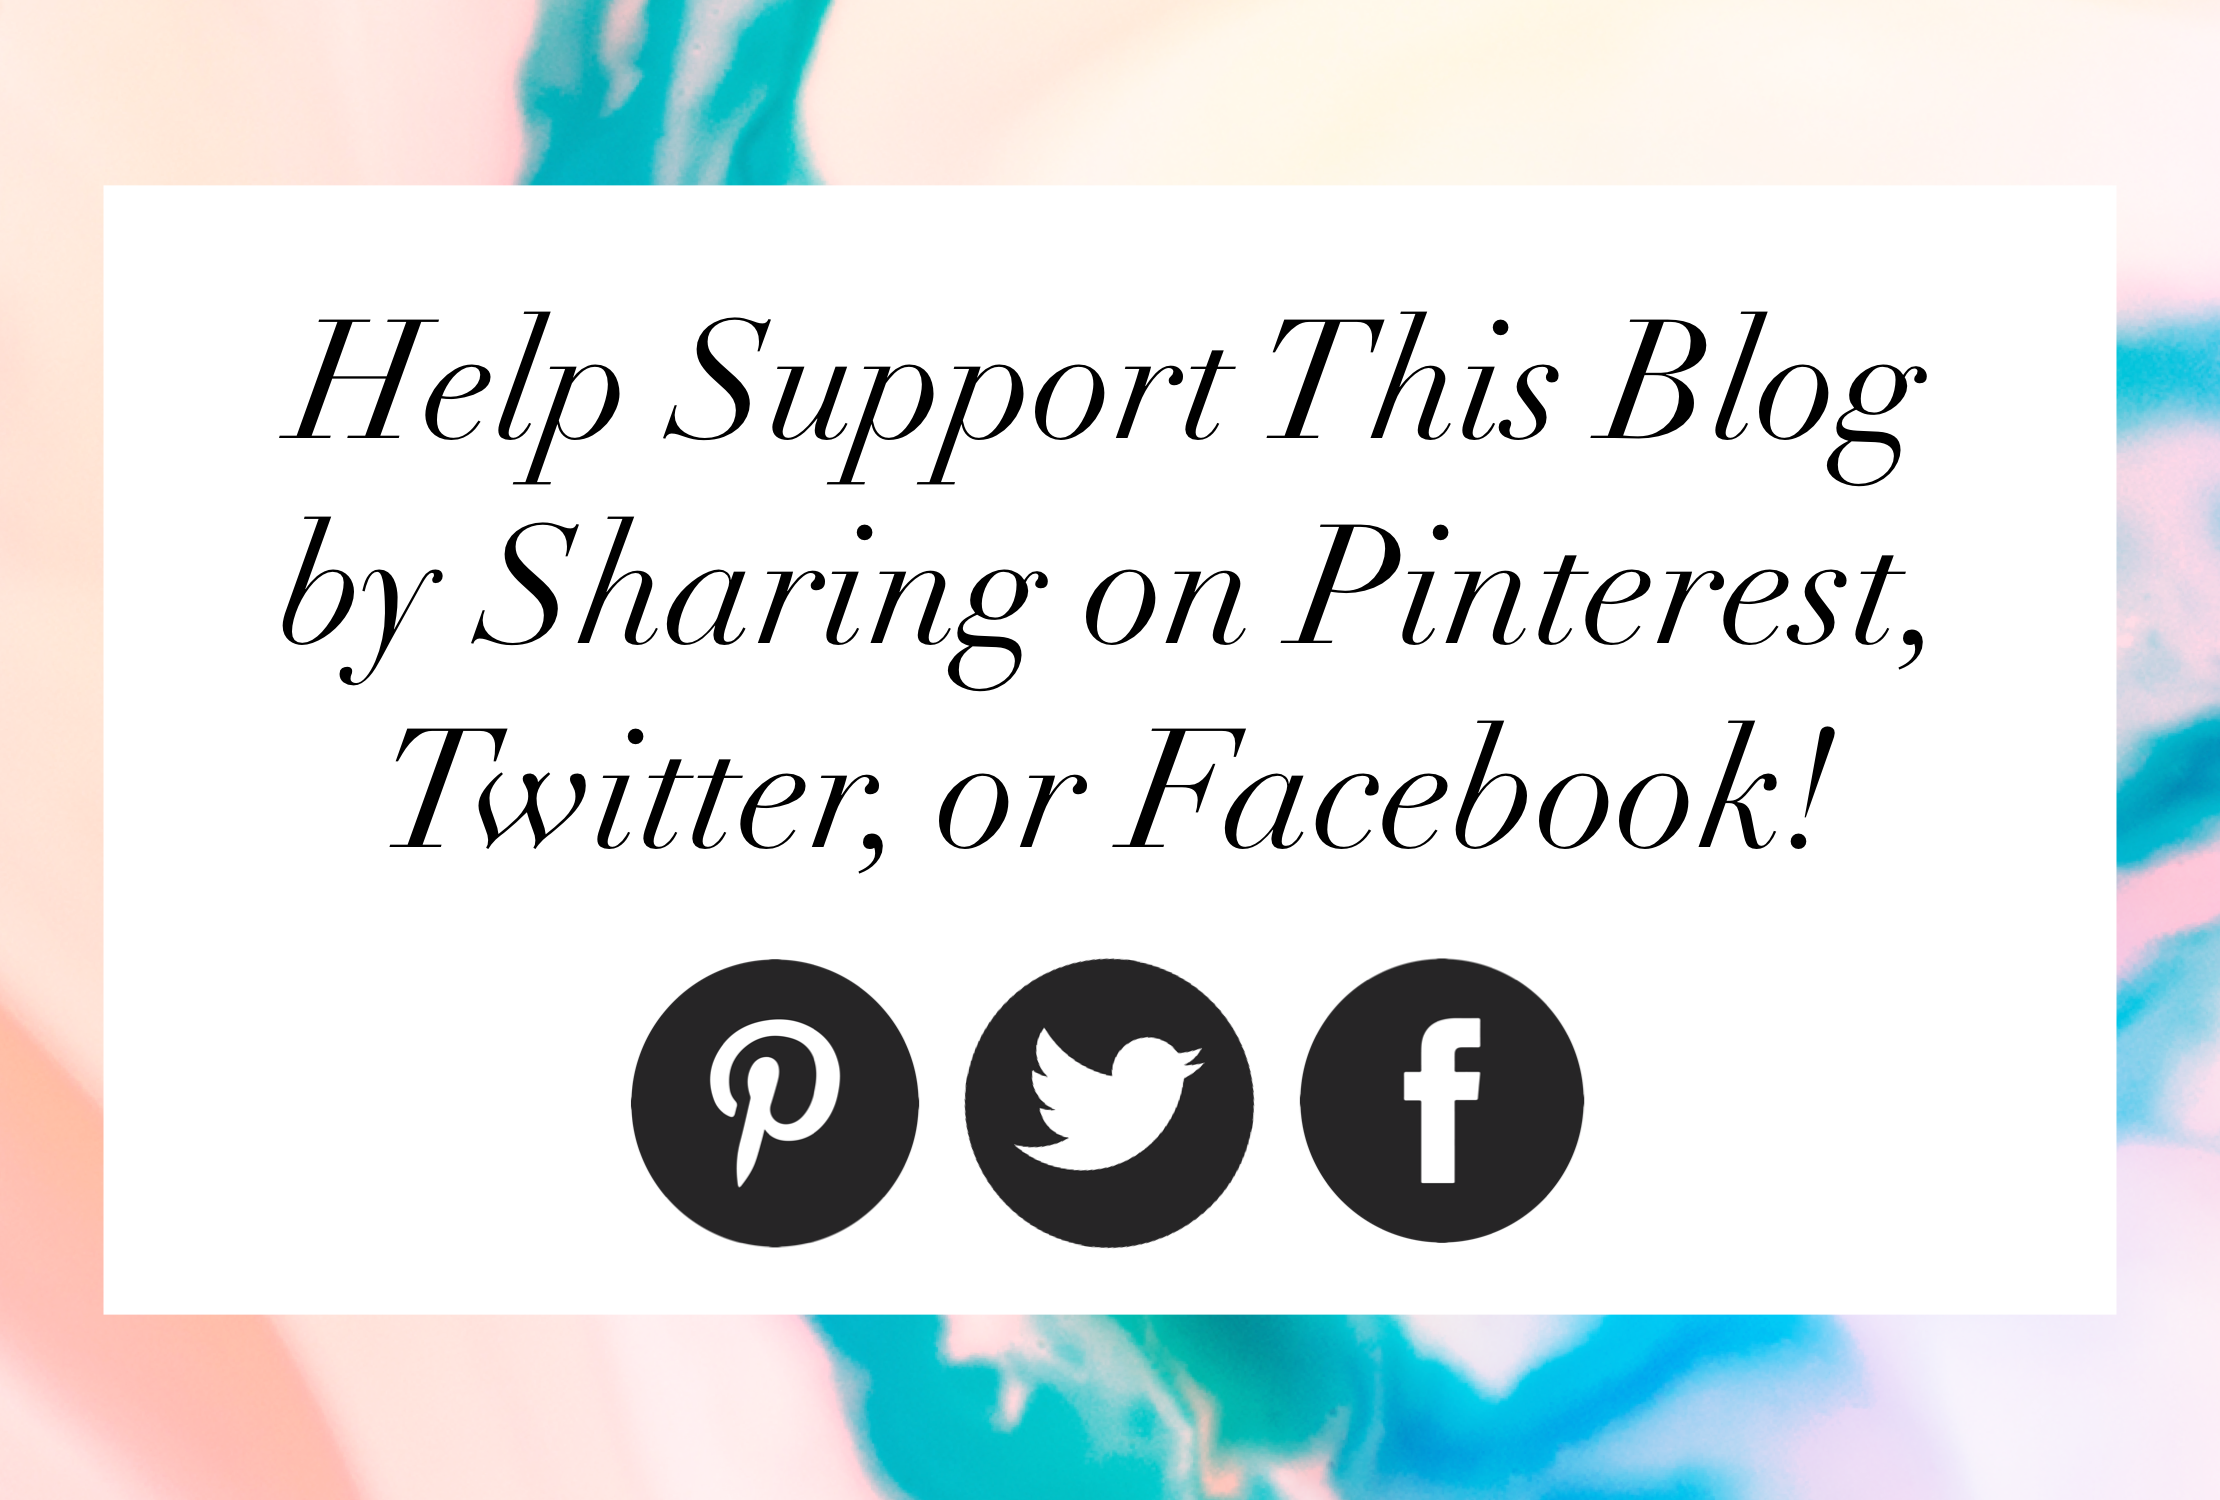 Share post on Pinterest, Facebook, or Twitter